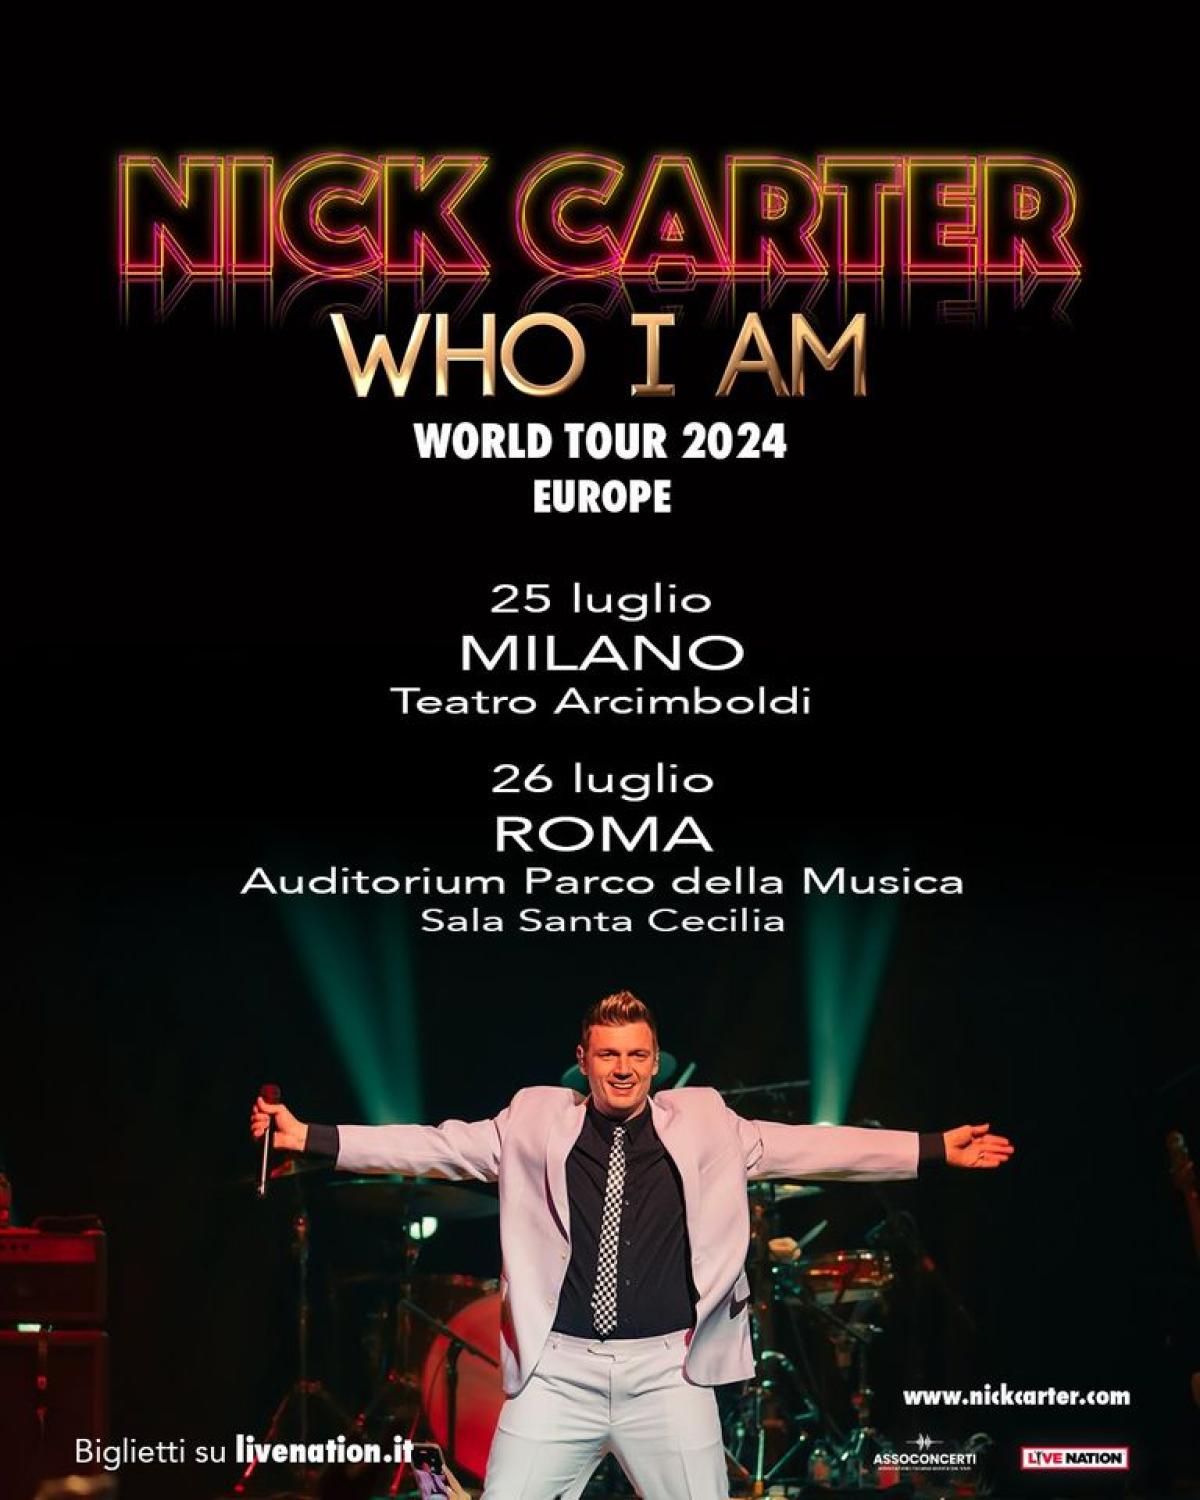 Nick Carter al Cavea Auditorium Parco della Musica Tickets